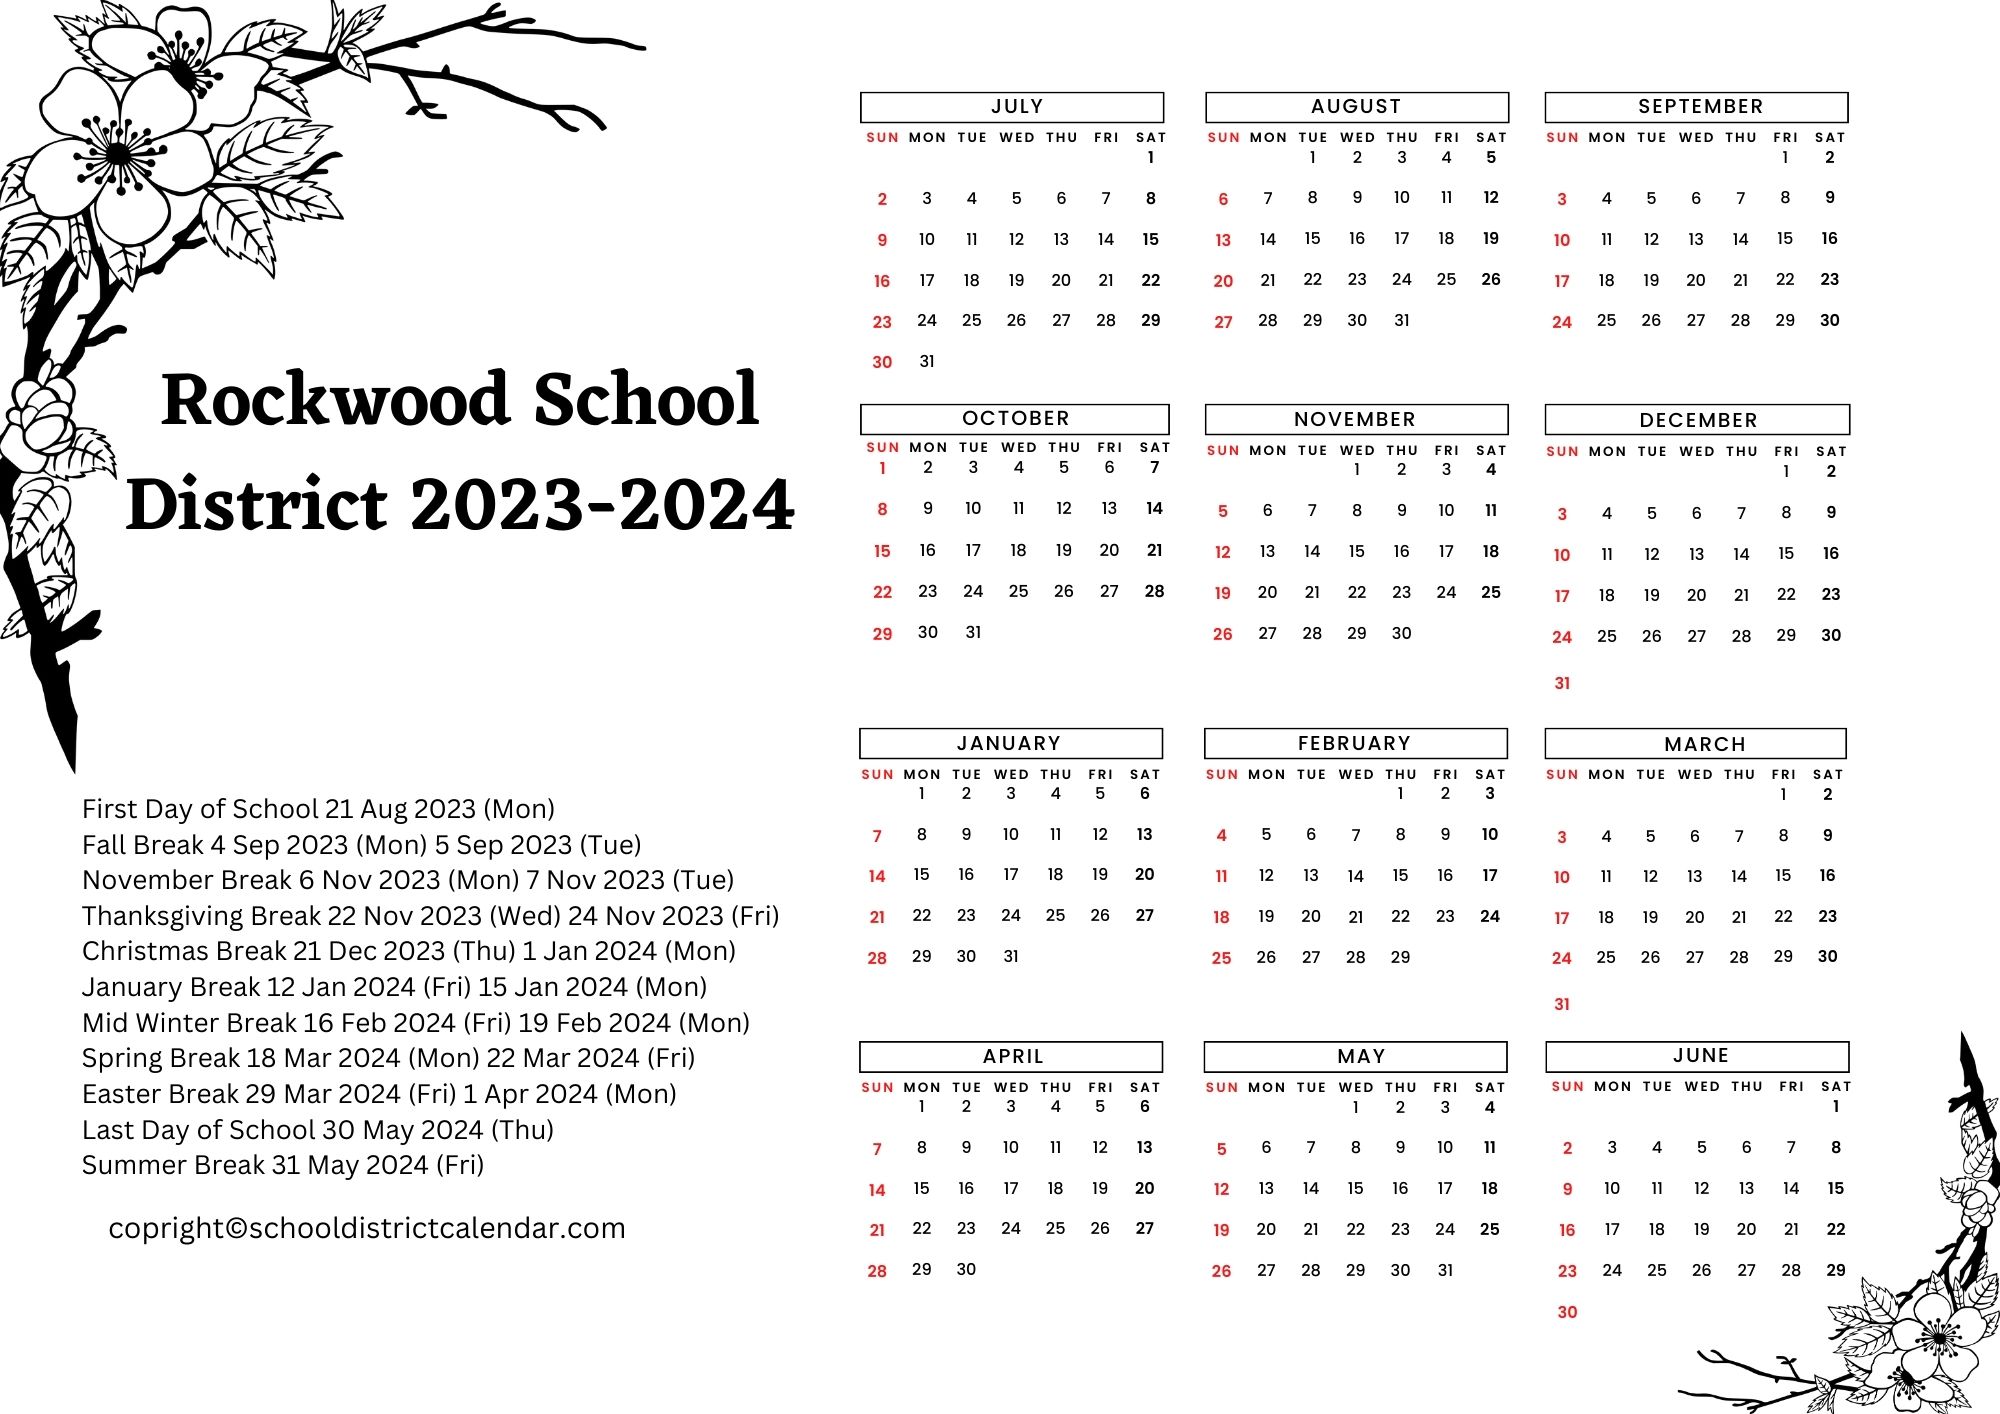 Rockwood School District Calendar Holidays 20232024